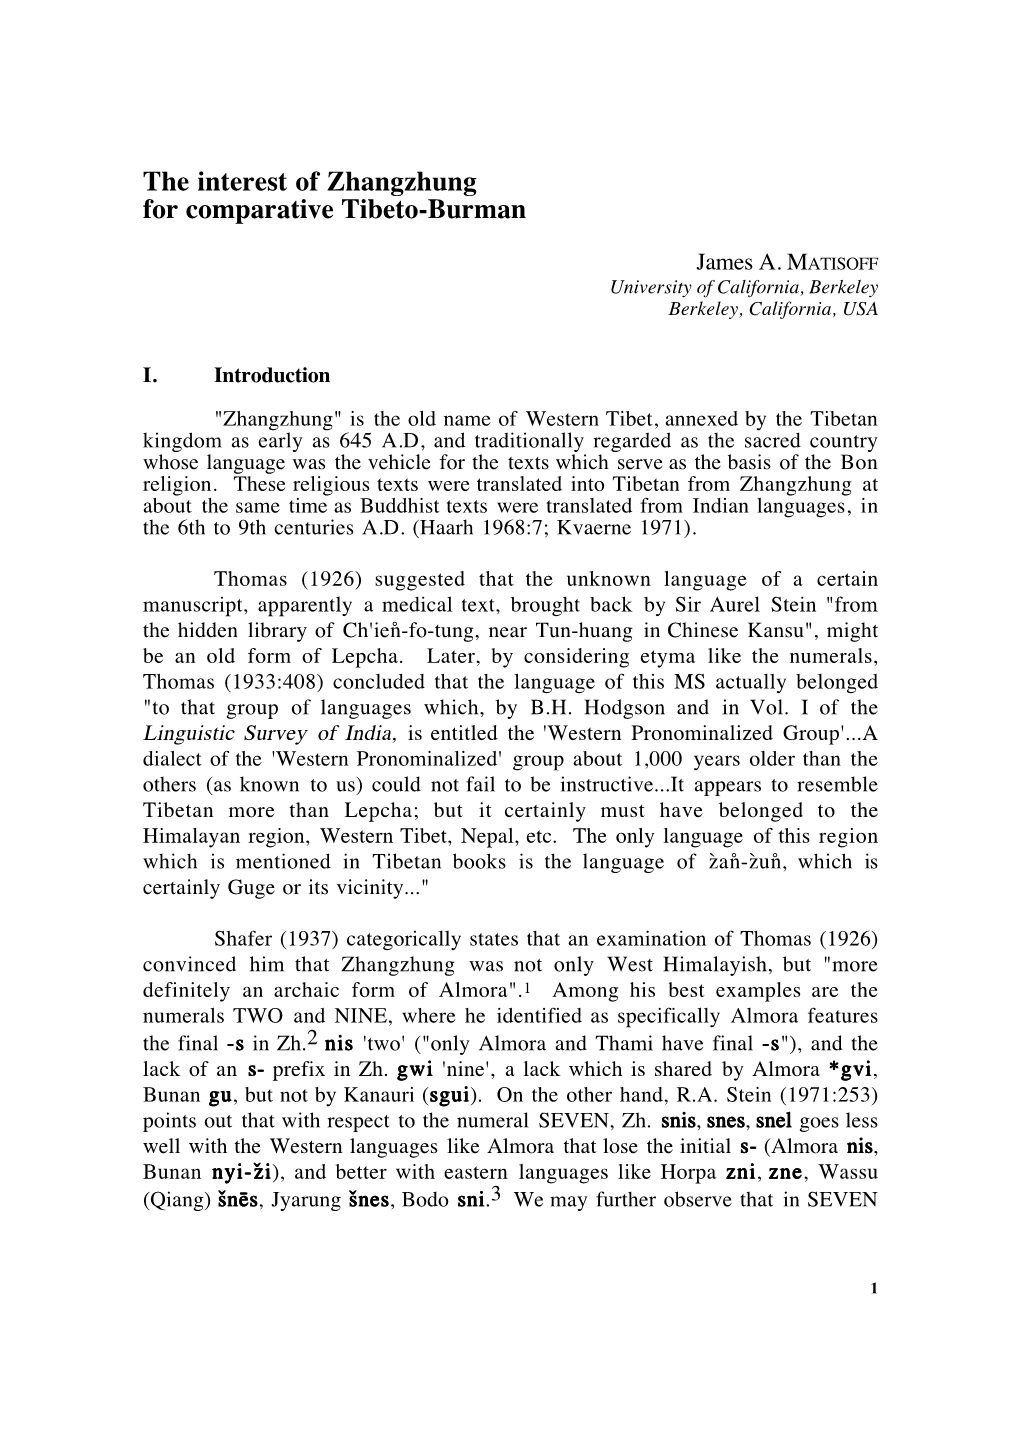 The Interest of Zhangzhung for Comparative Tibeto-Burman